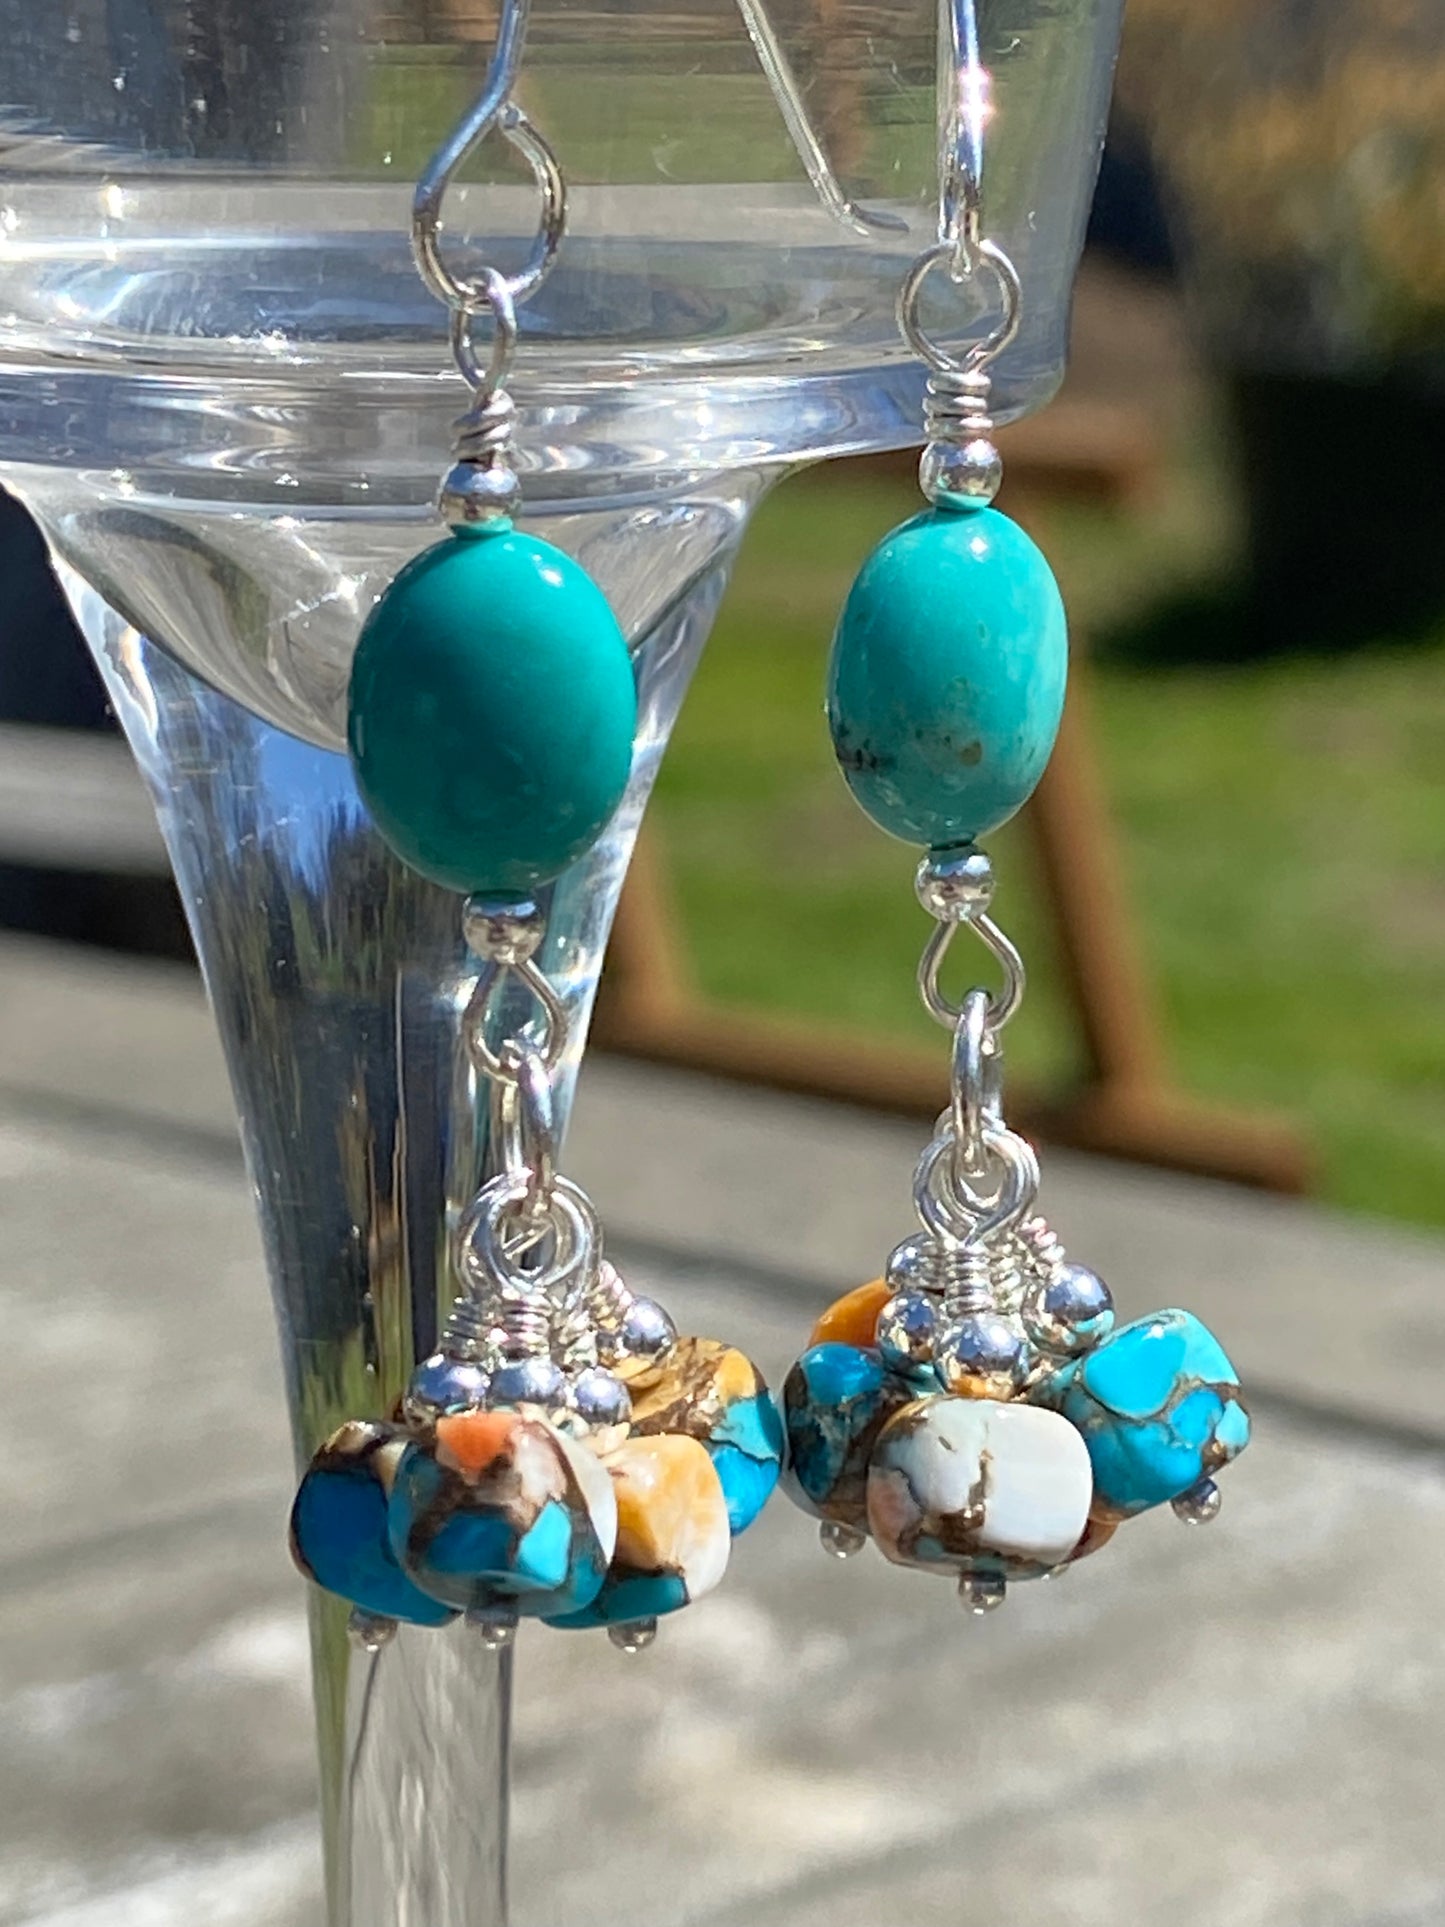 Kingman Turquoise & with a Tassel of Kingman Beads Earrings  (Turq, oyster shell & bronze) All Handmade